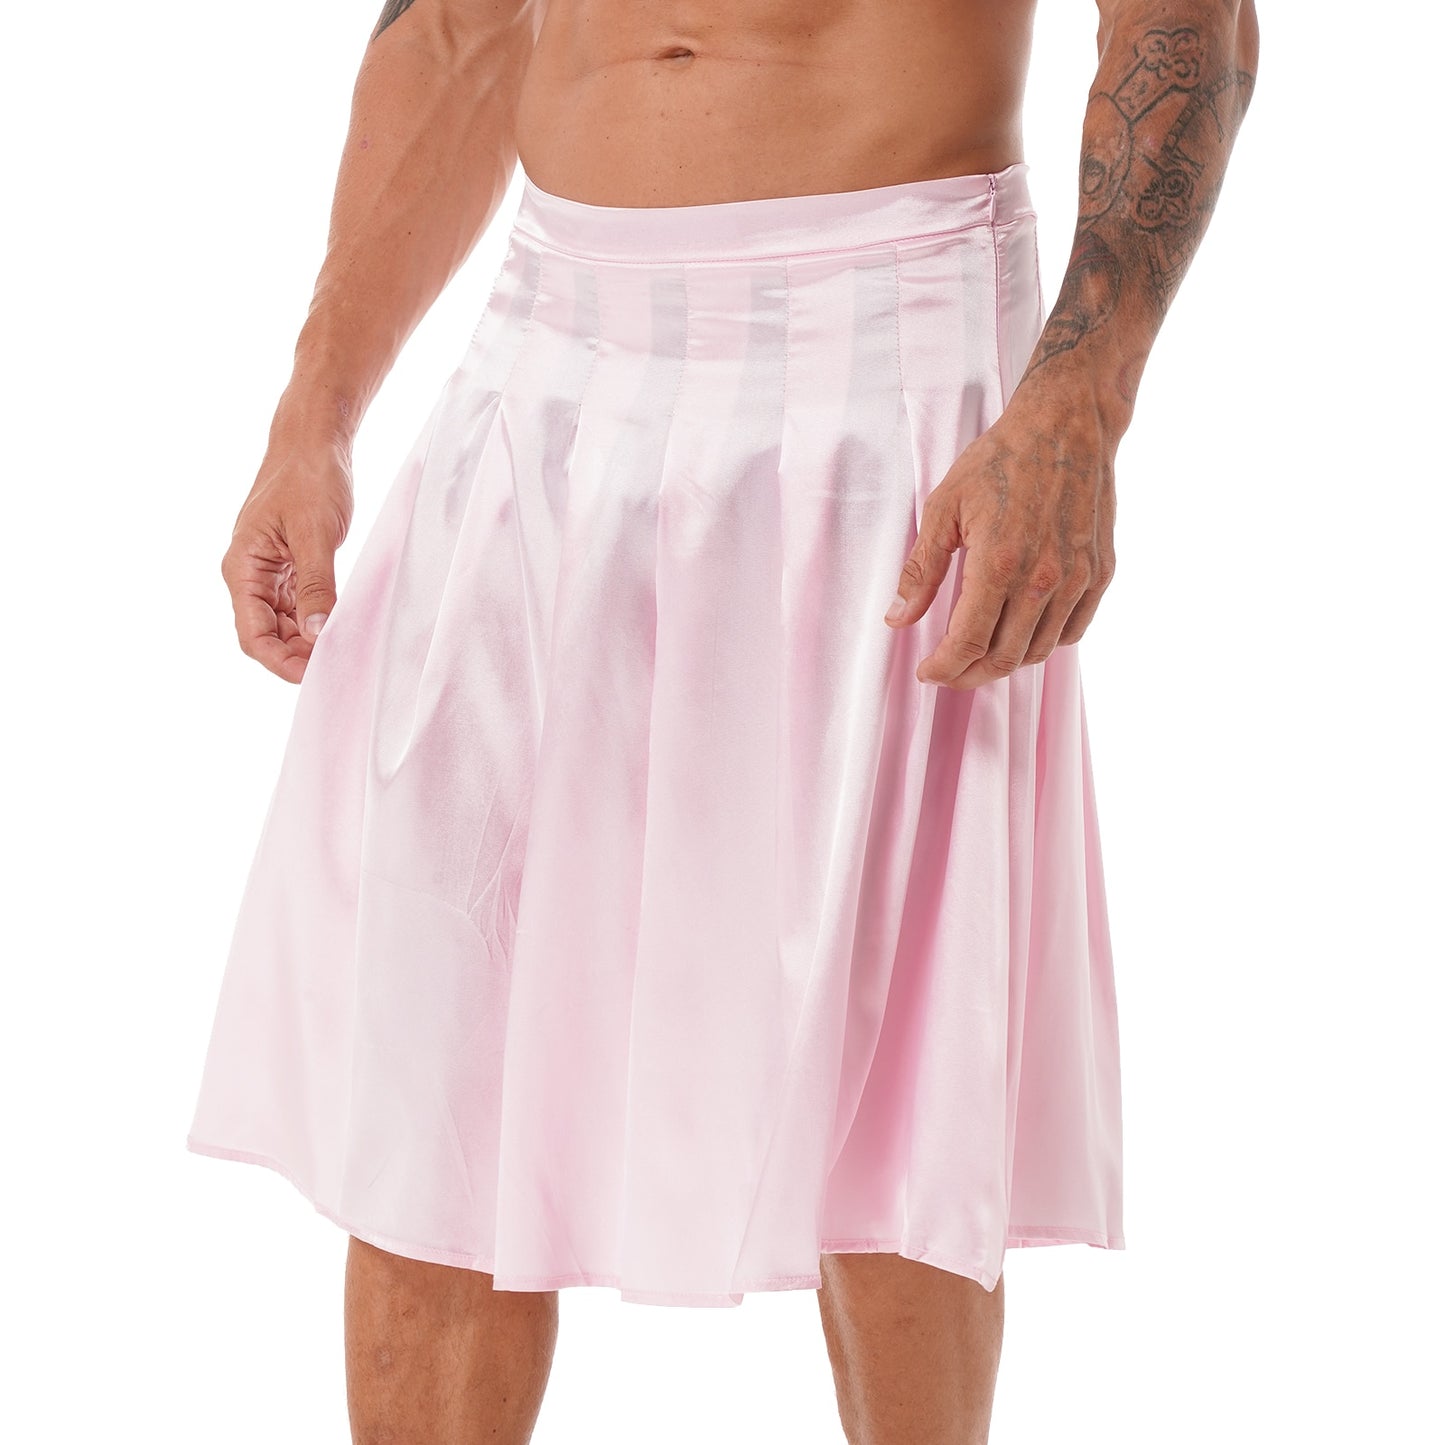 Tulle Skirted Panties: Sexy Crossdresser's Underwear